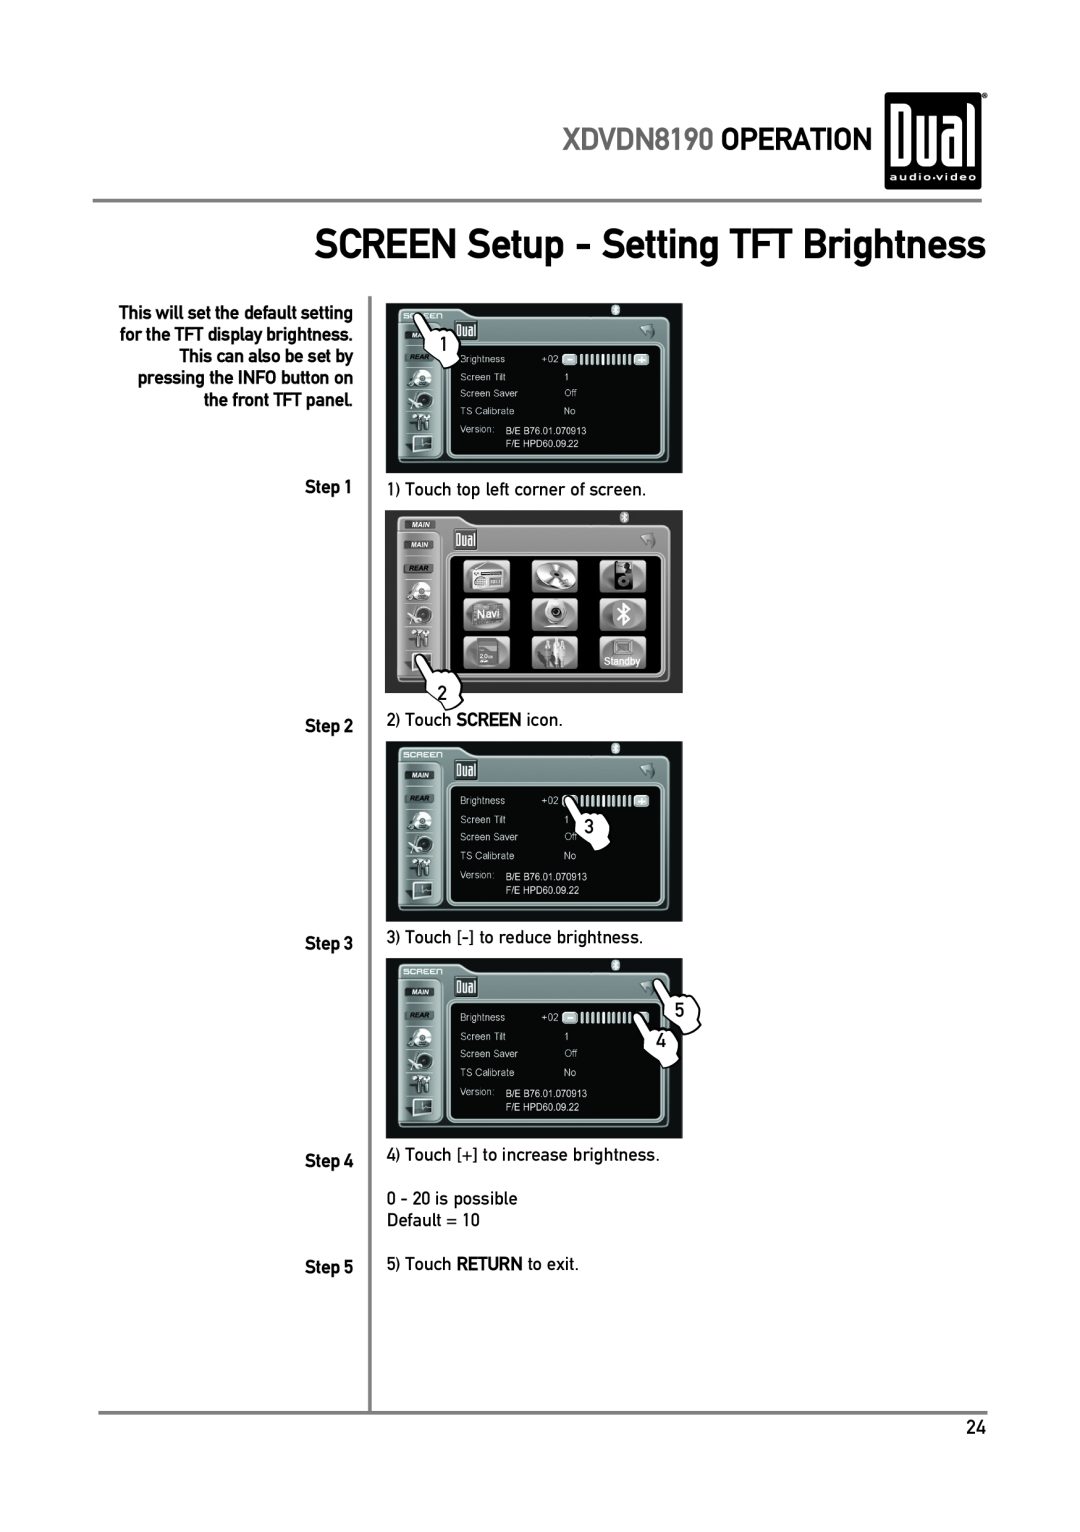 Dual owner manual SCREEN Setup - Setting TFT Brightness, L5 L4, XDVDN8190 OPERATION, Step Step Step Step Step 